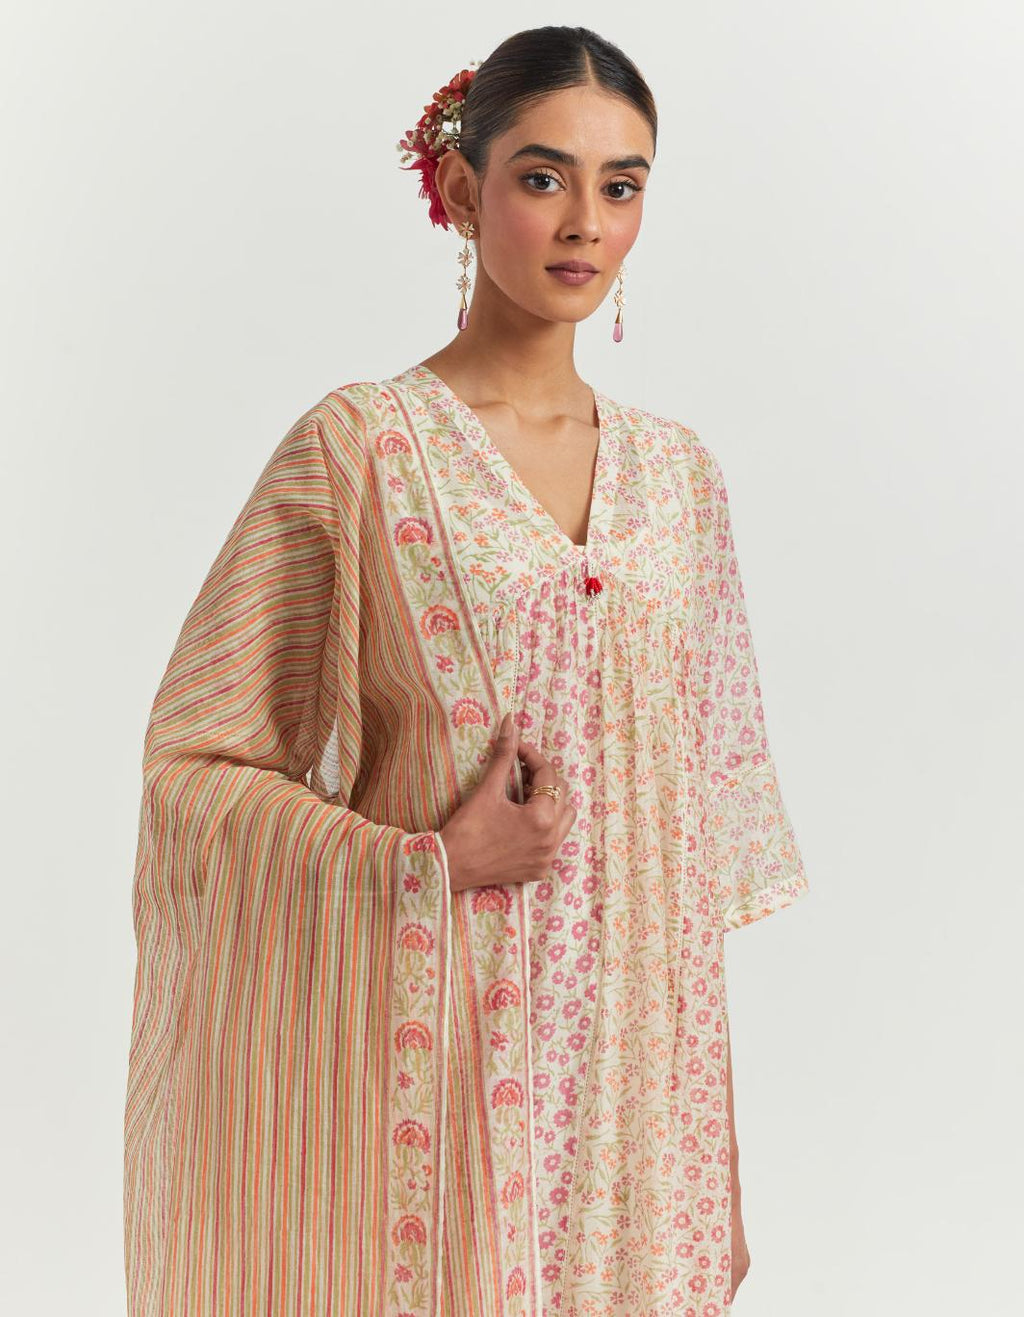 Multi colored hand block printed cotton chanderi kurta dress set with V neck, yoke and fine gathers at empire line.